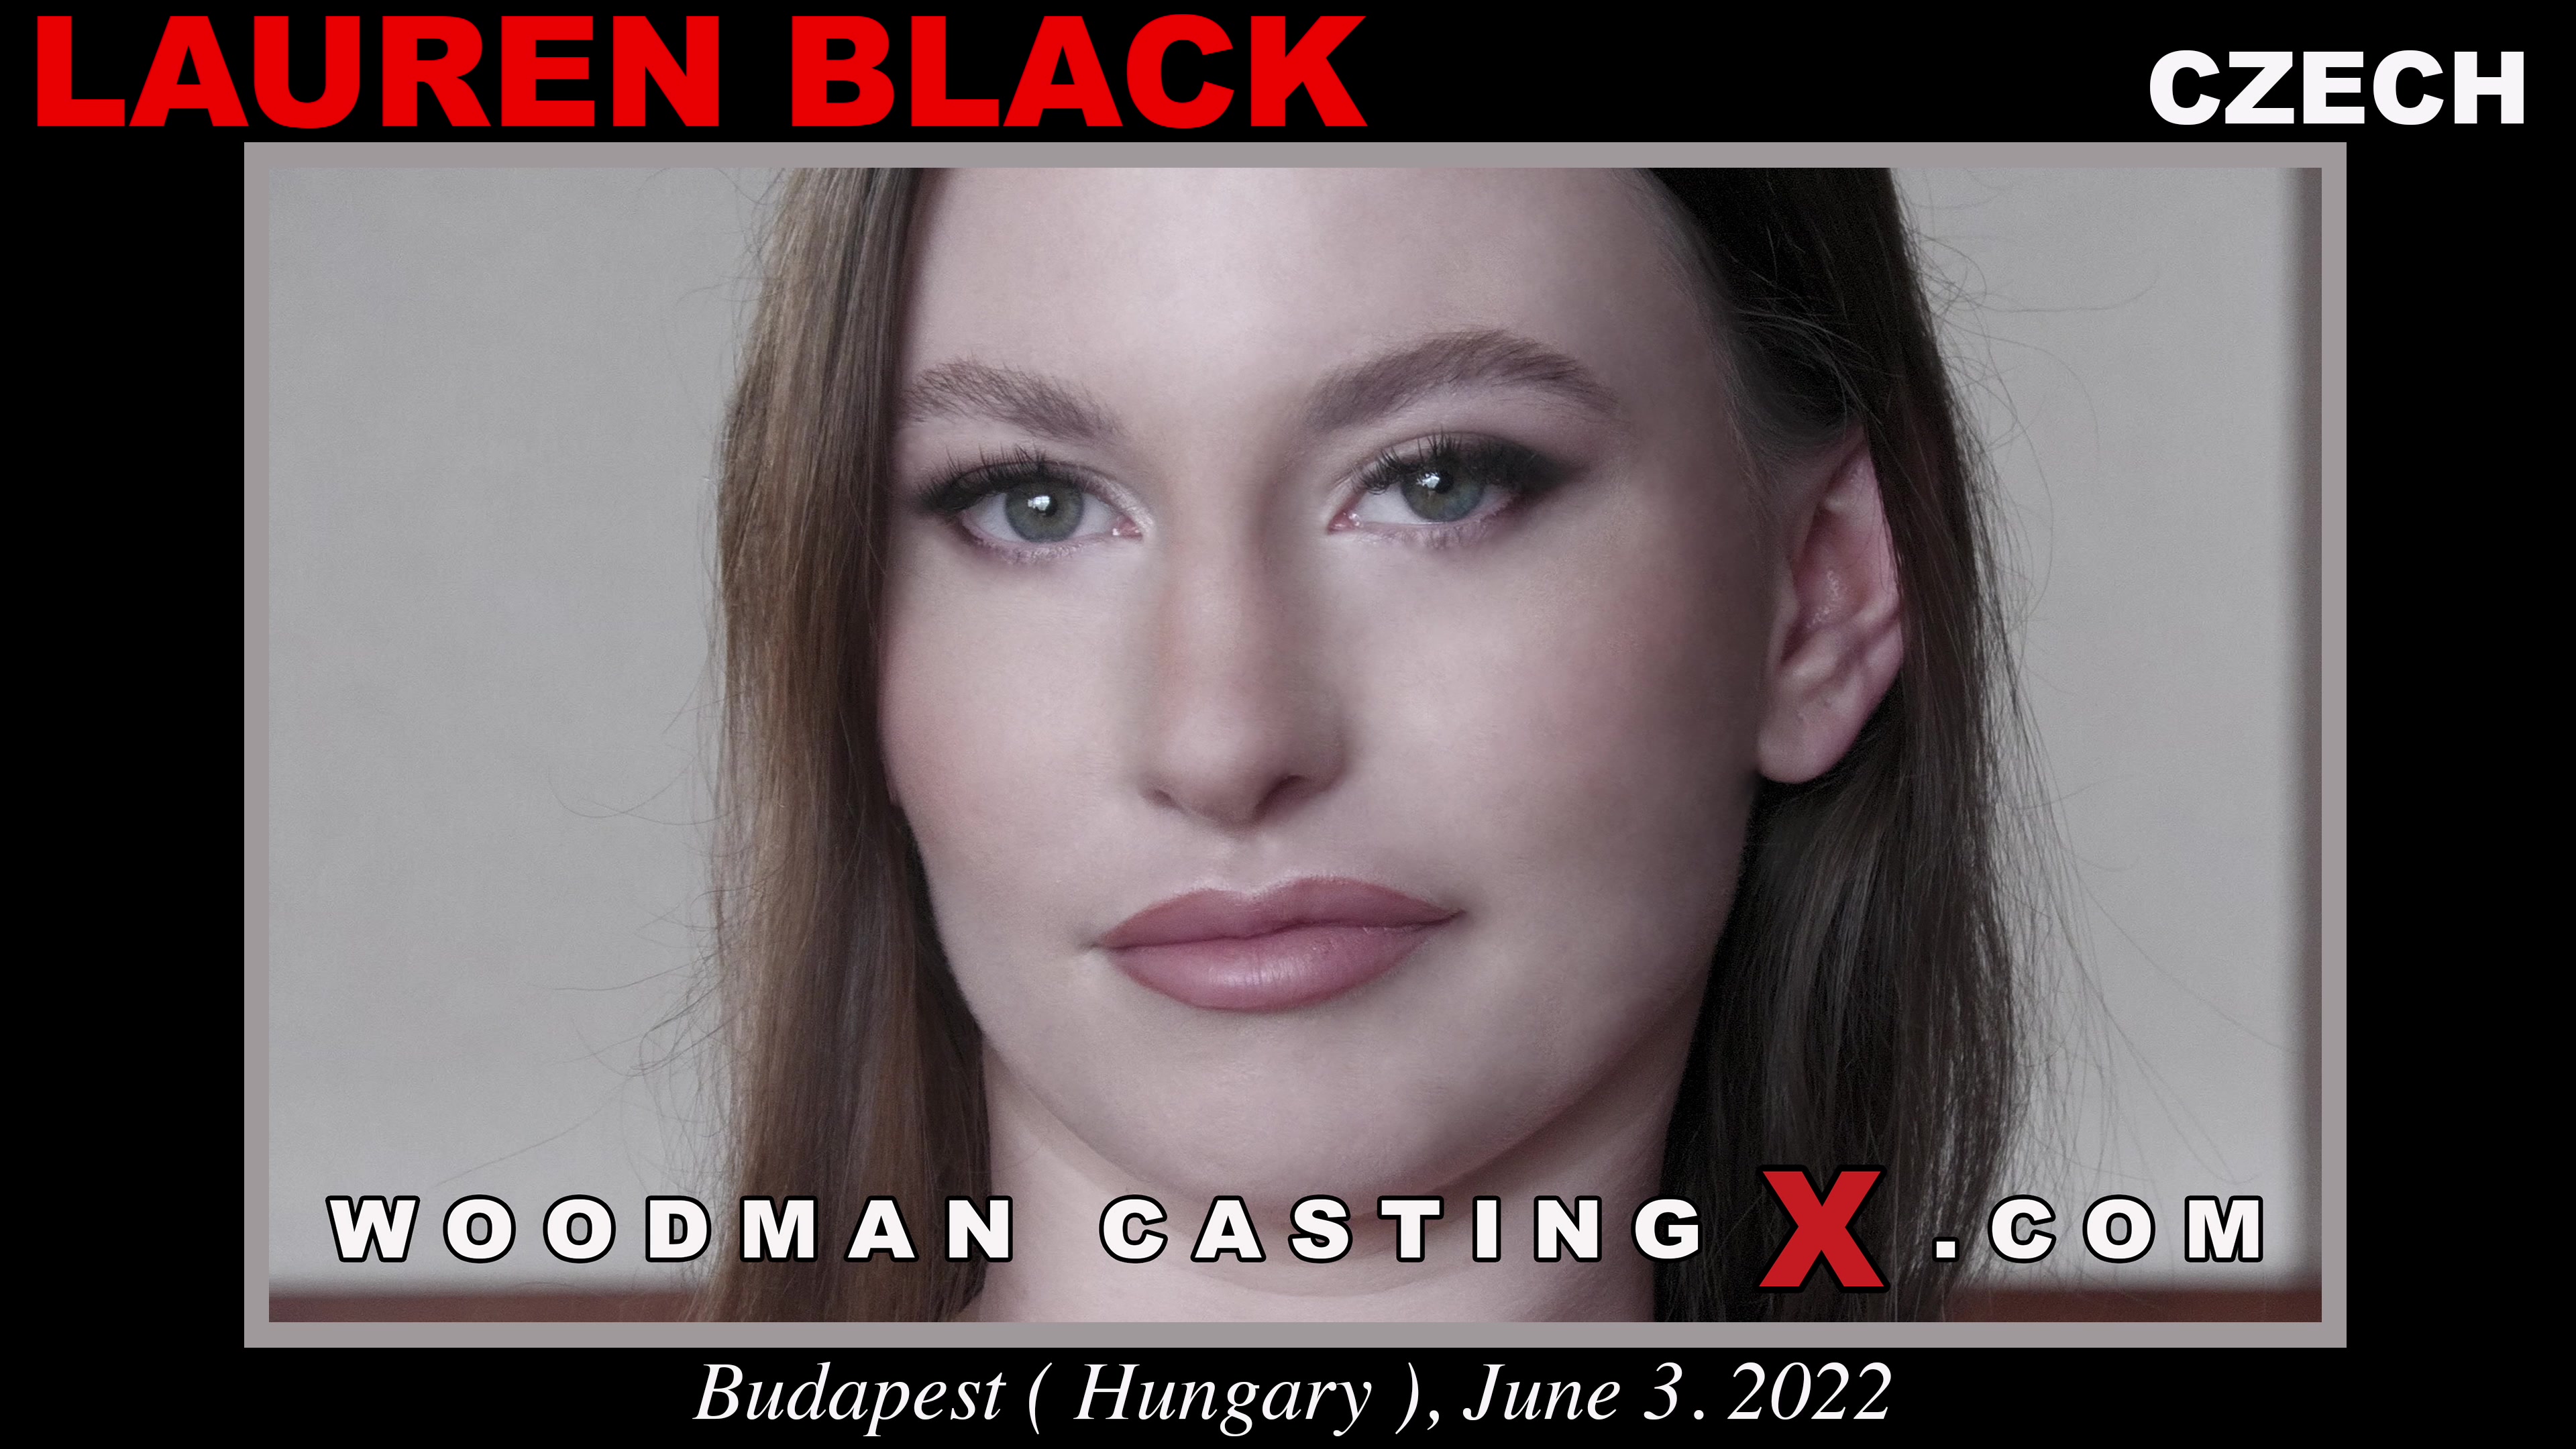 Woodman Casting X On Twitter [new Video] Lauren Black